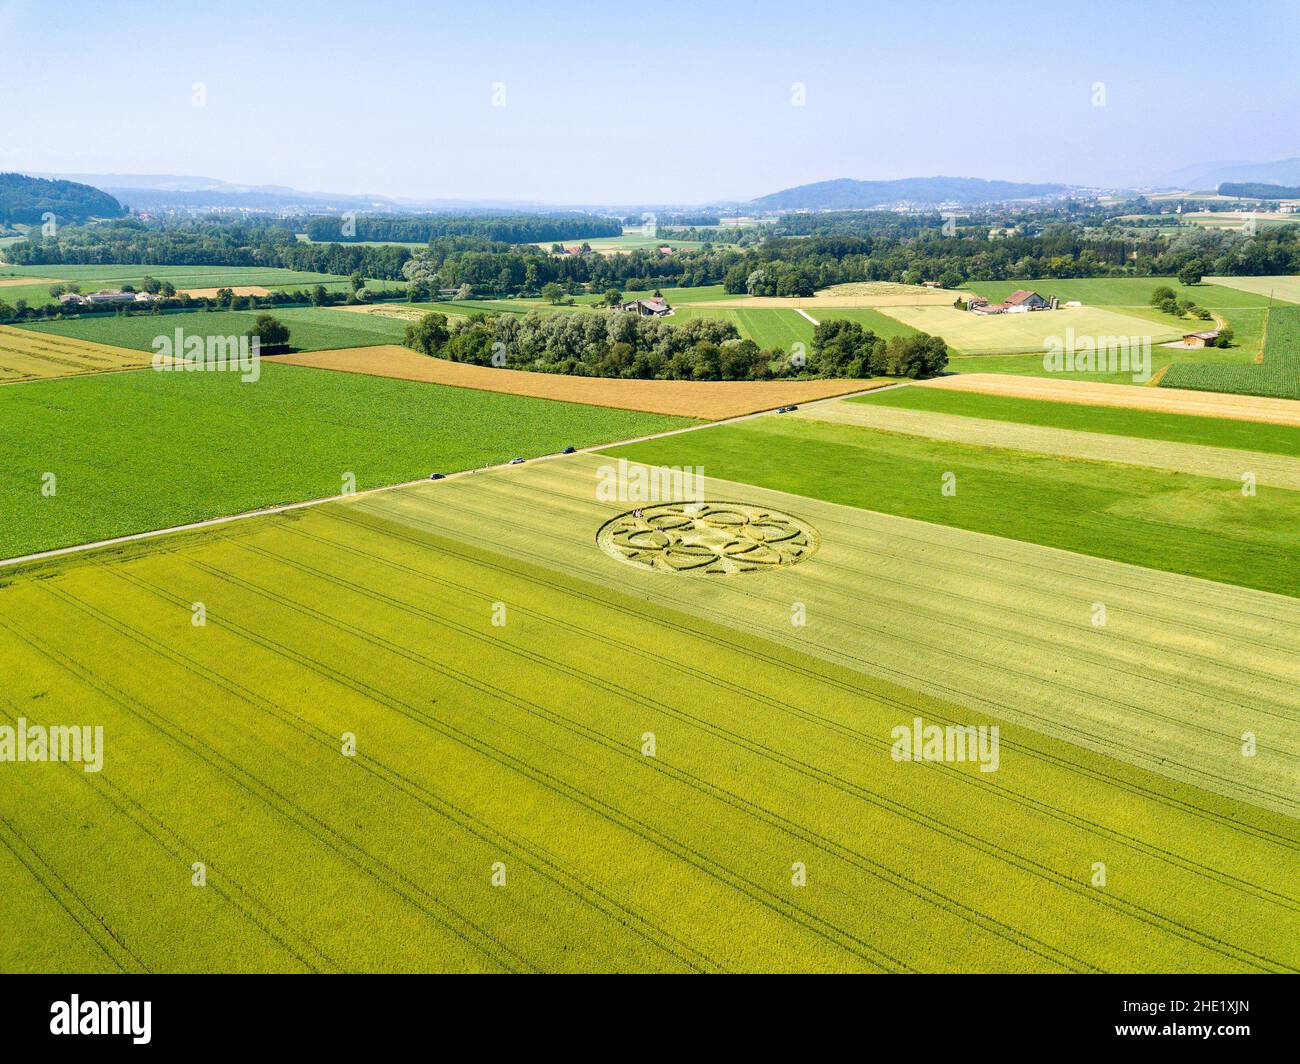 Canton Bern, Switzerland - July 05, 2019: mysterious crop circle emerged overnight in wheat field with beautiful pattern. Stock Photo